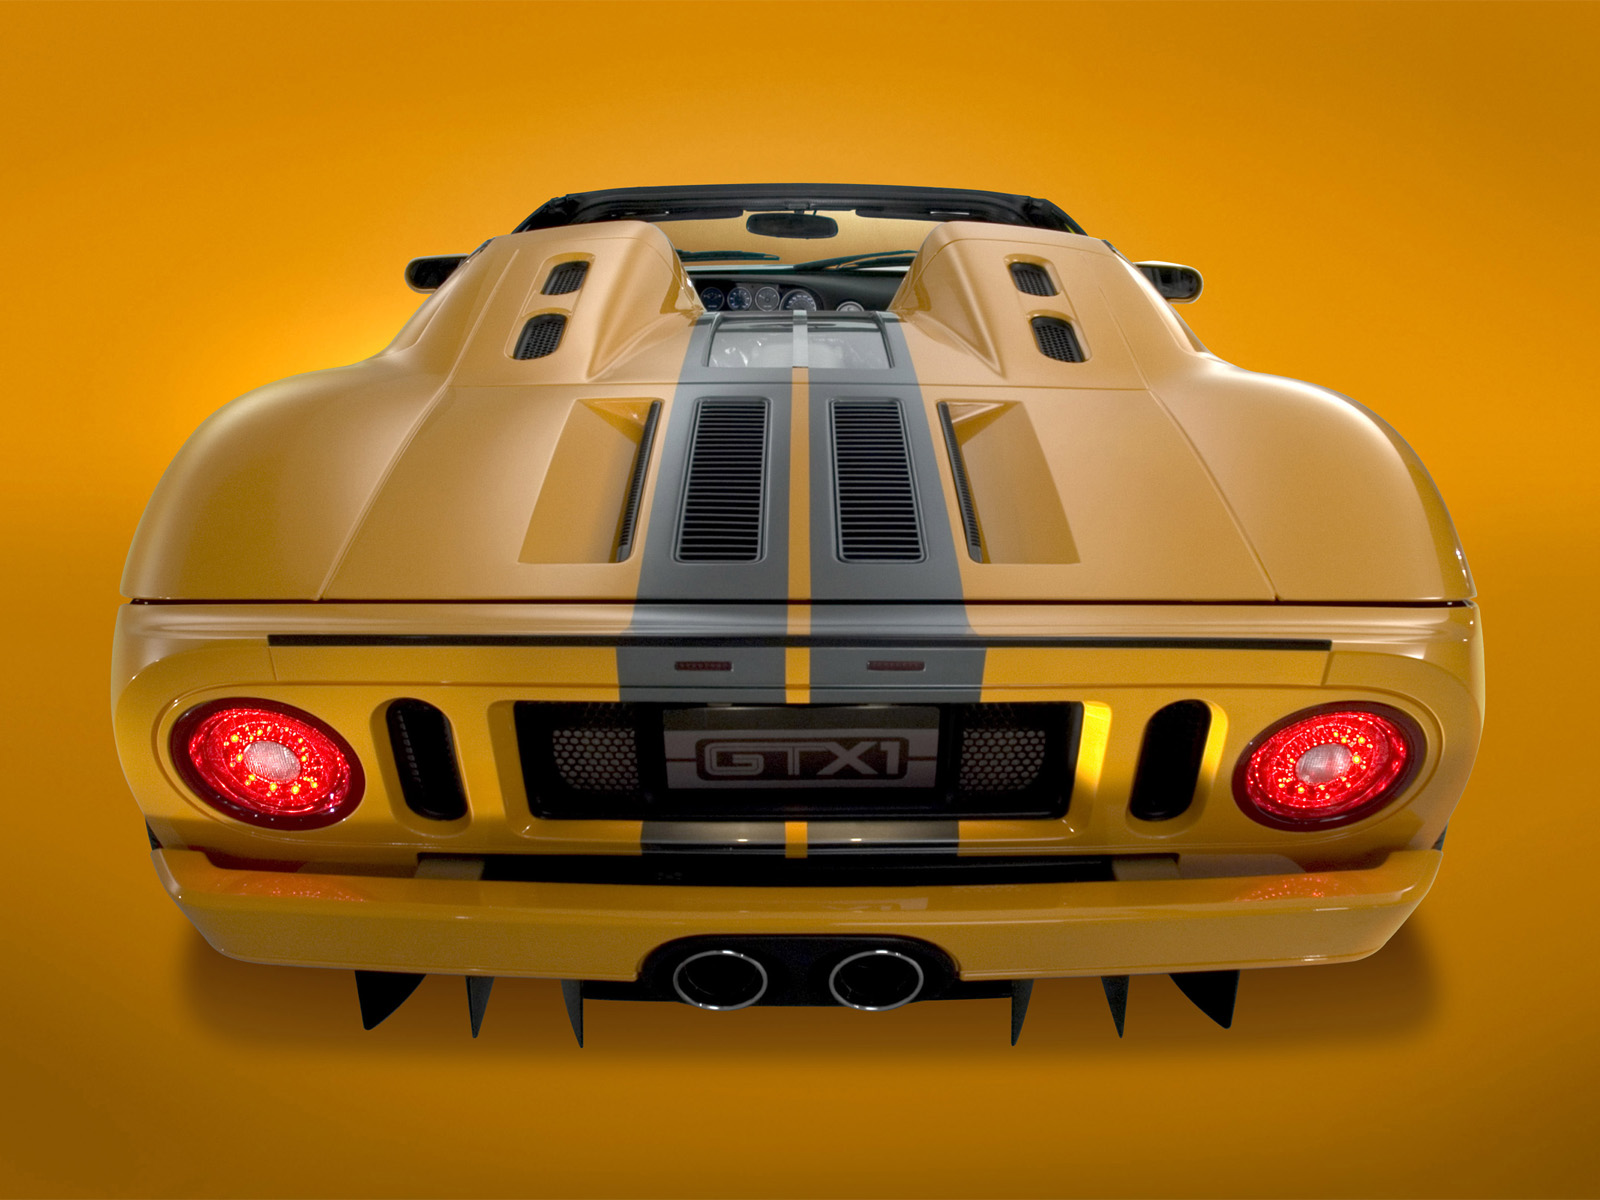 2006, Ford, Gtx 1, Roadster, Supercar, Supercars Wallpaper